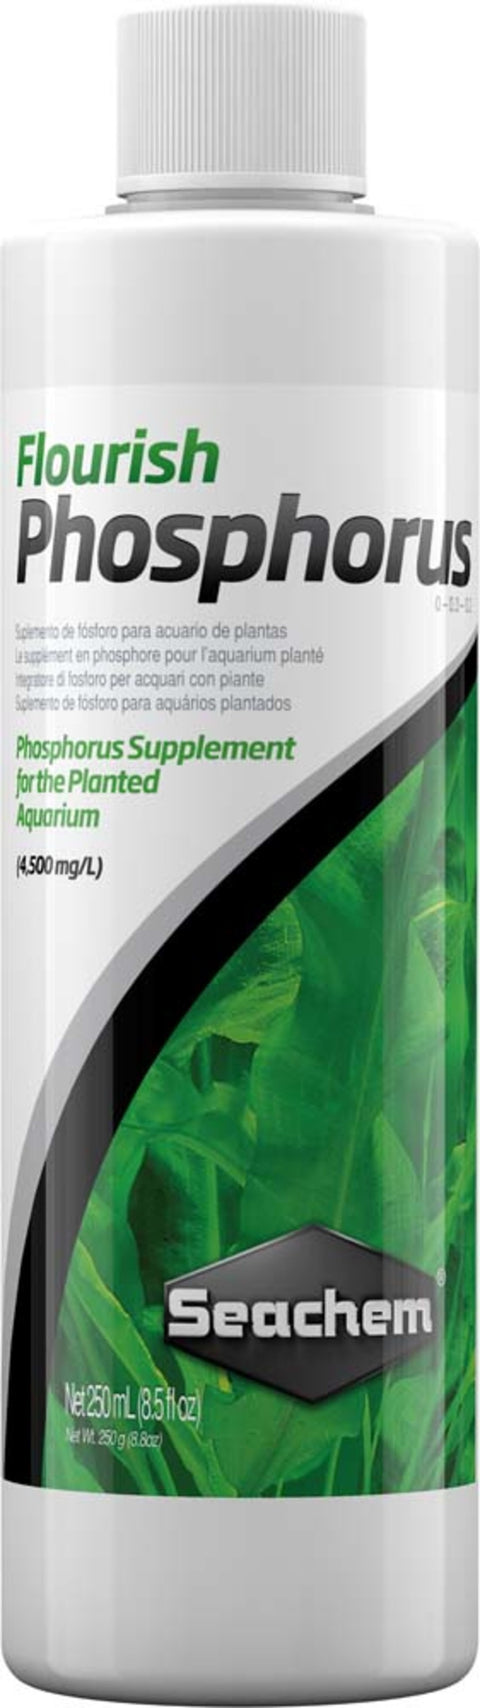 Seachem Flourish Phosphorus Plant Supplement